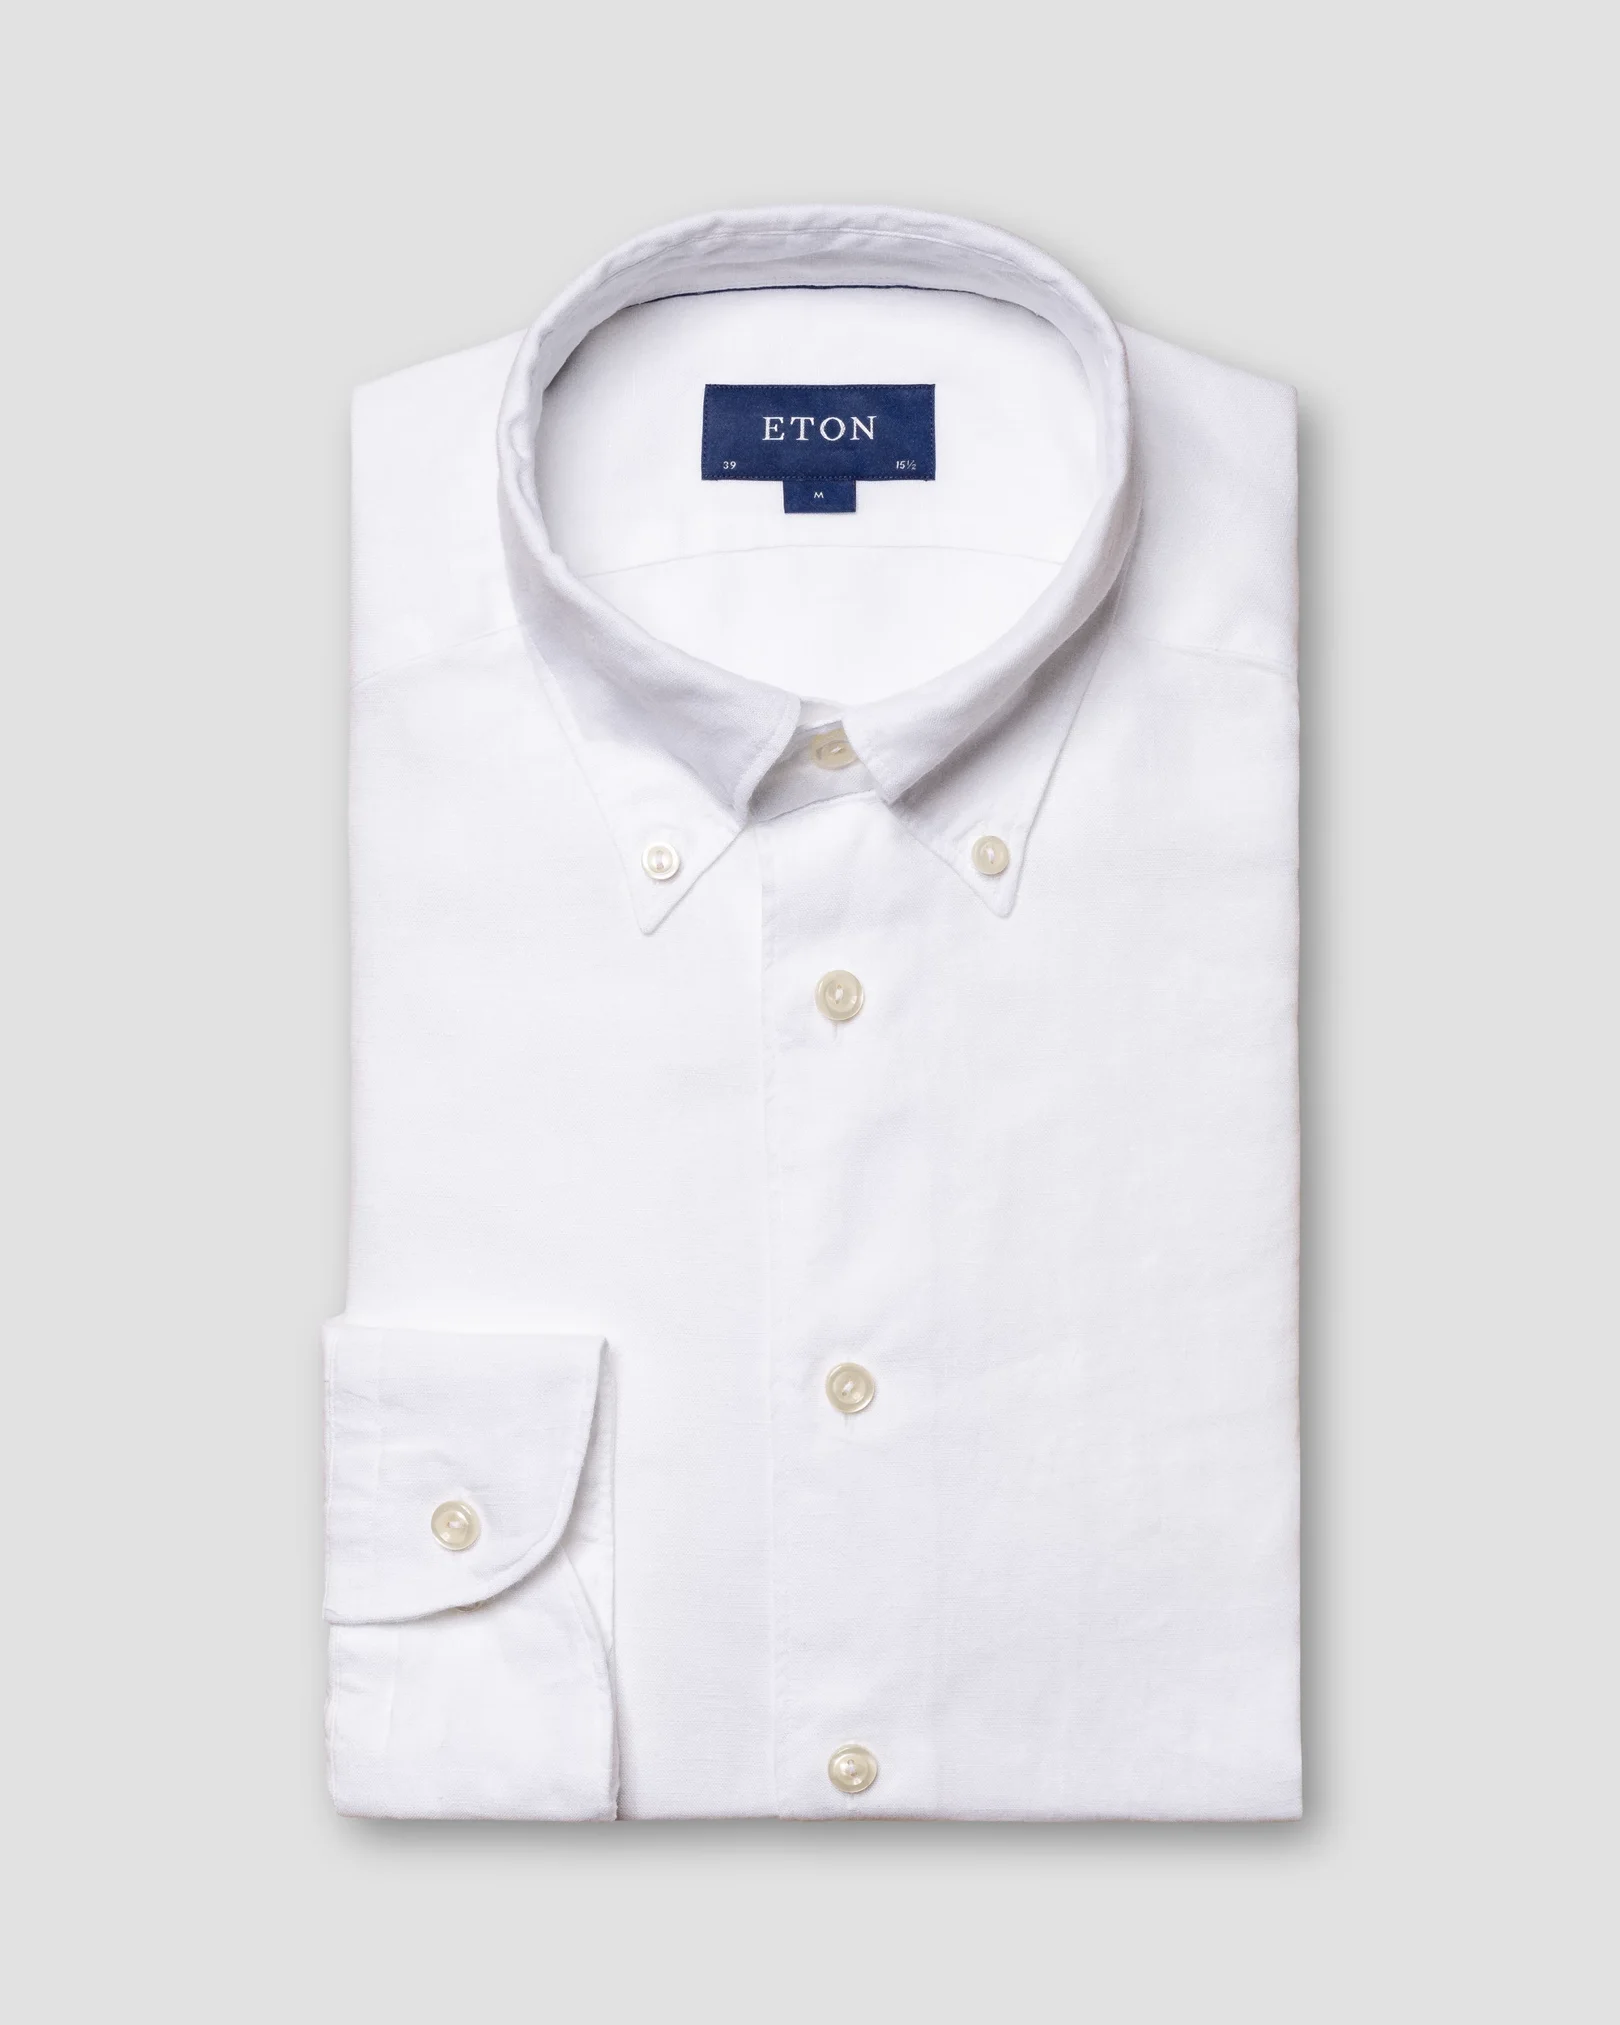 Eton - white linen shirt button down